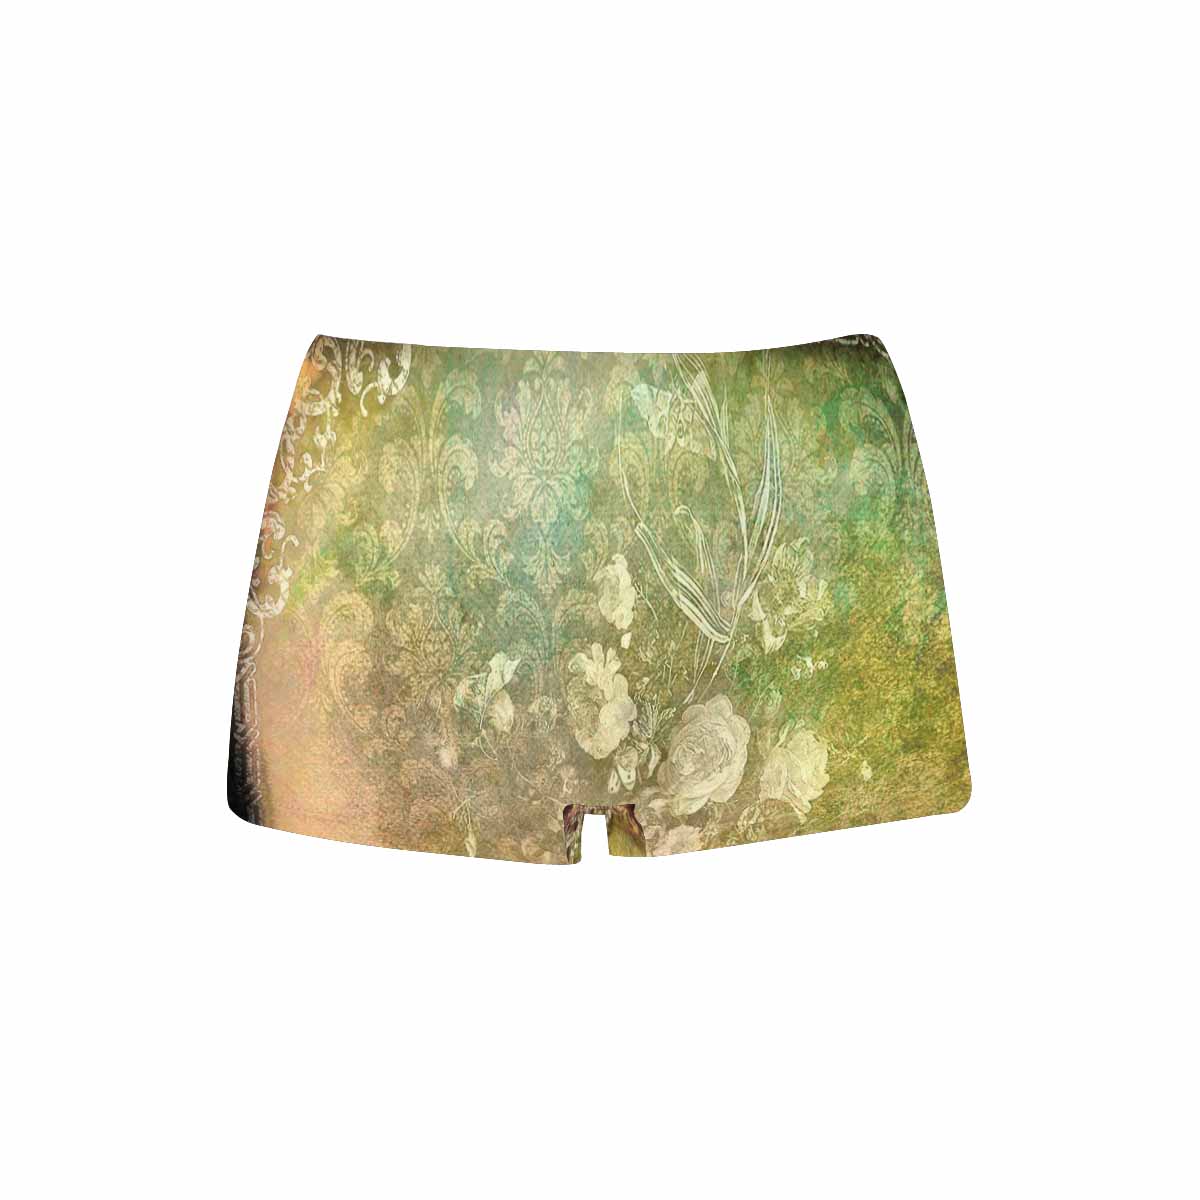 Antique general boyshorts, daisy dukes, pum pum shorts, panties, design 09